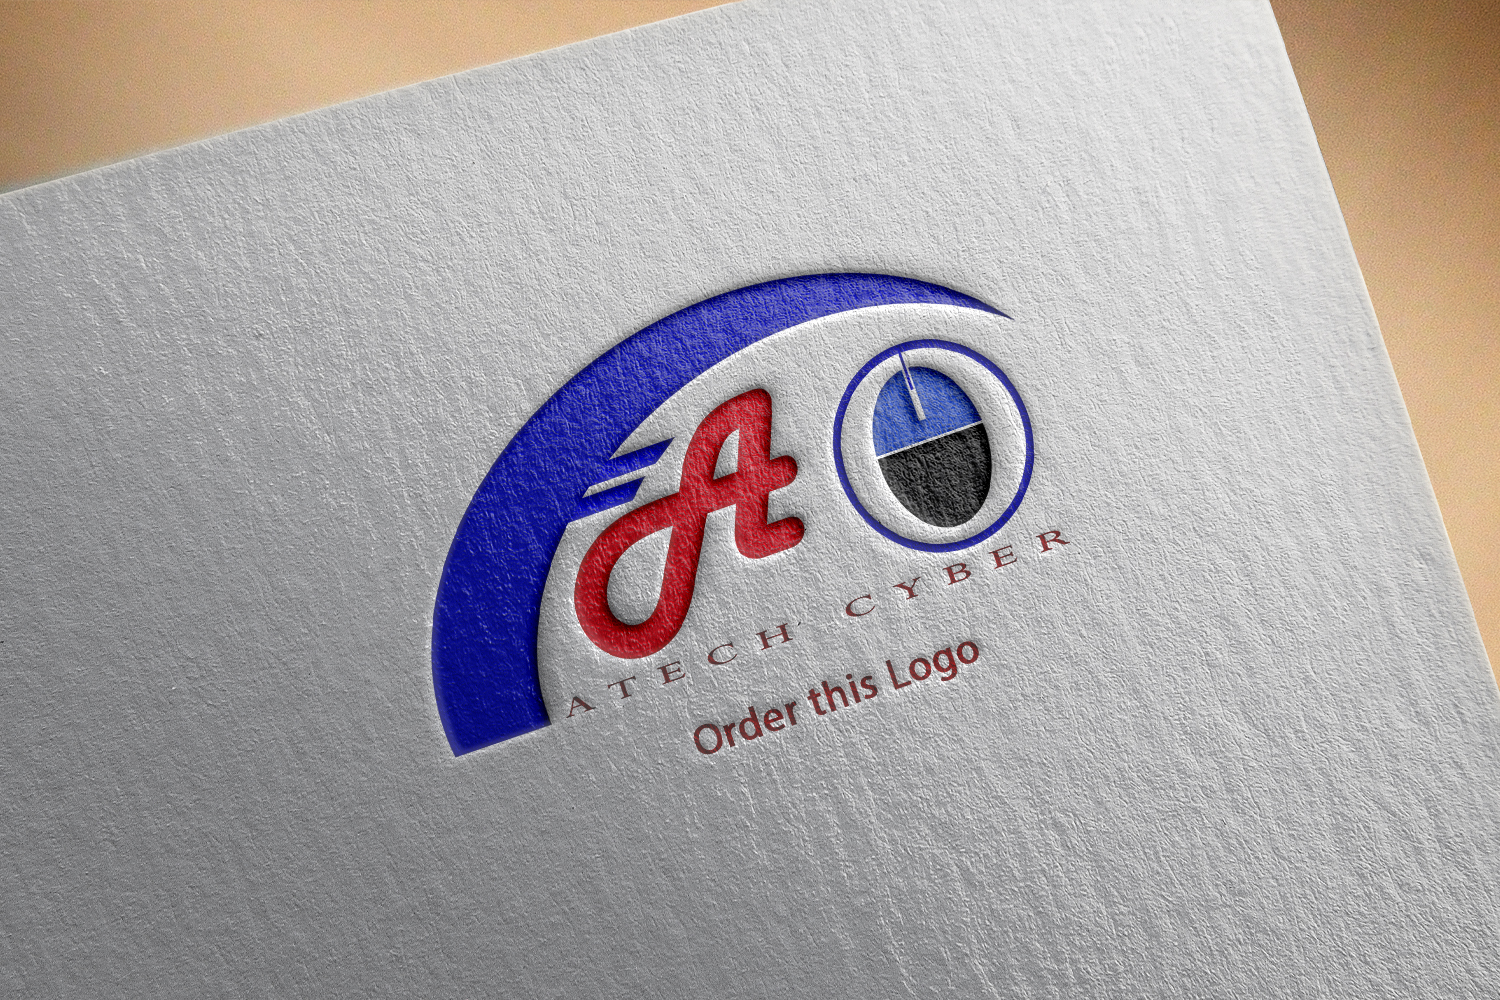 A-Tech Cyber Logo Design